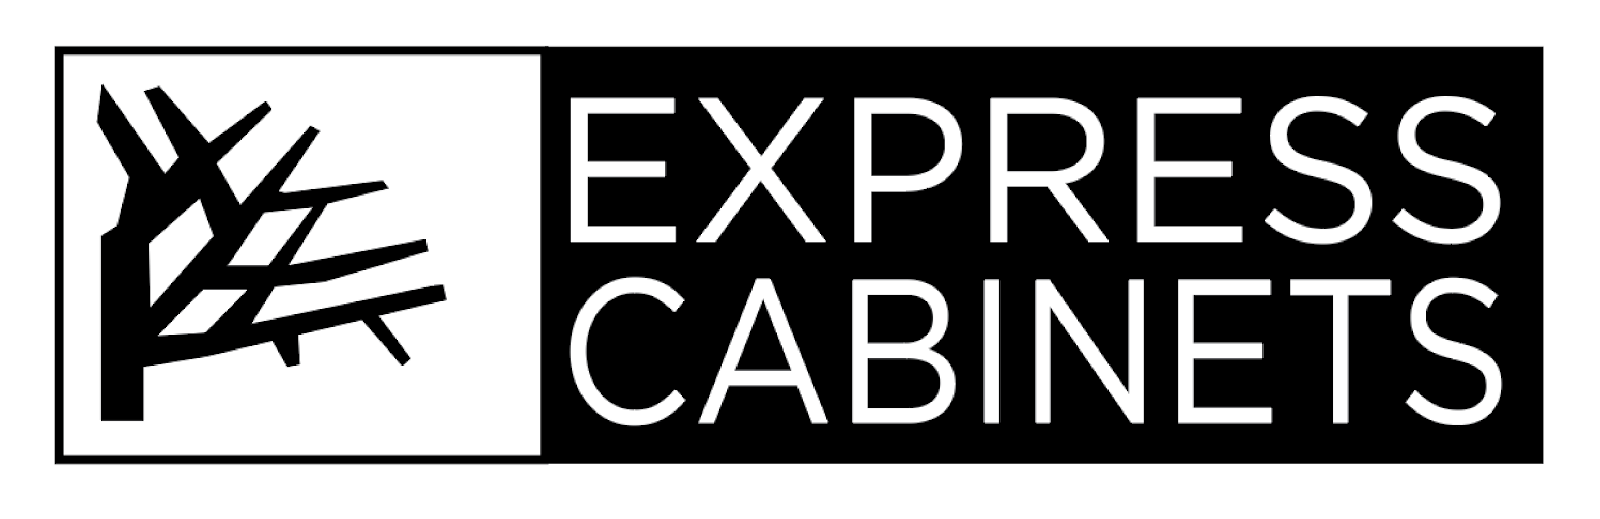 Utah Express Cabinets